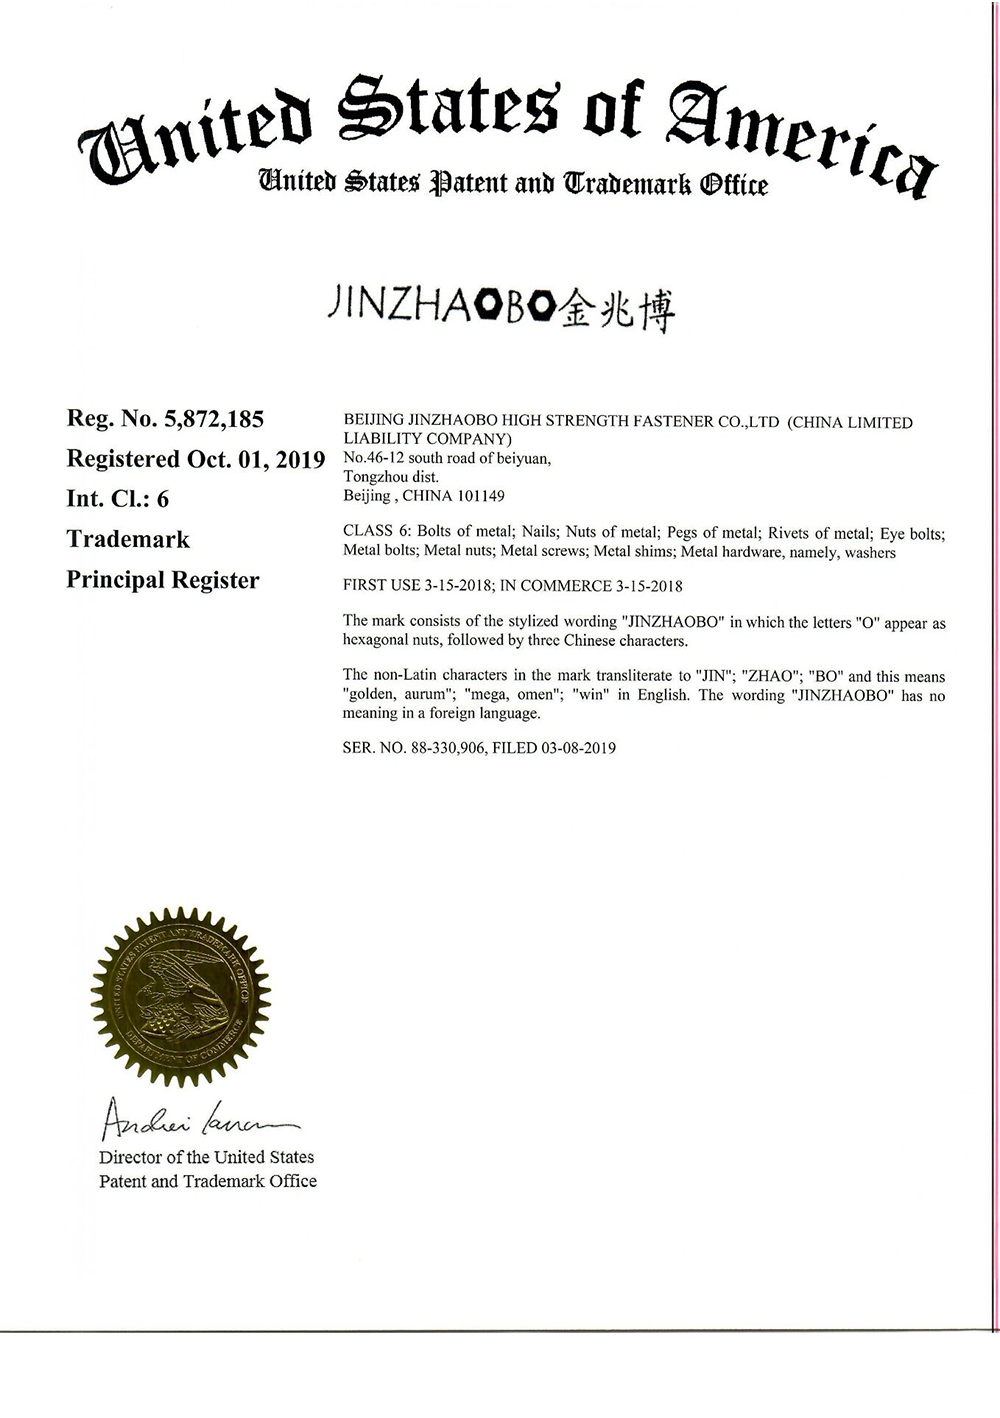 US registered trademark certificate